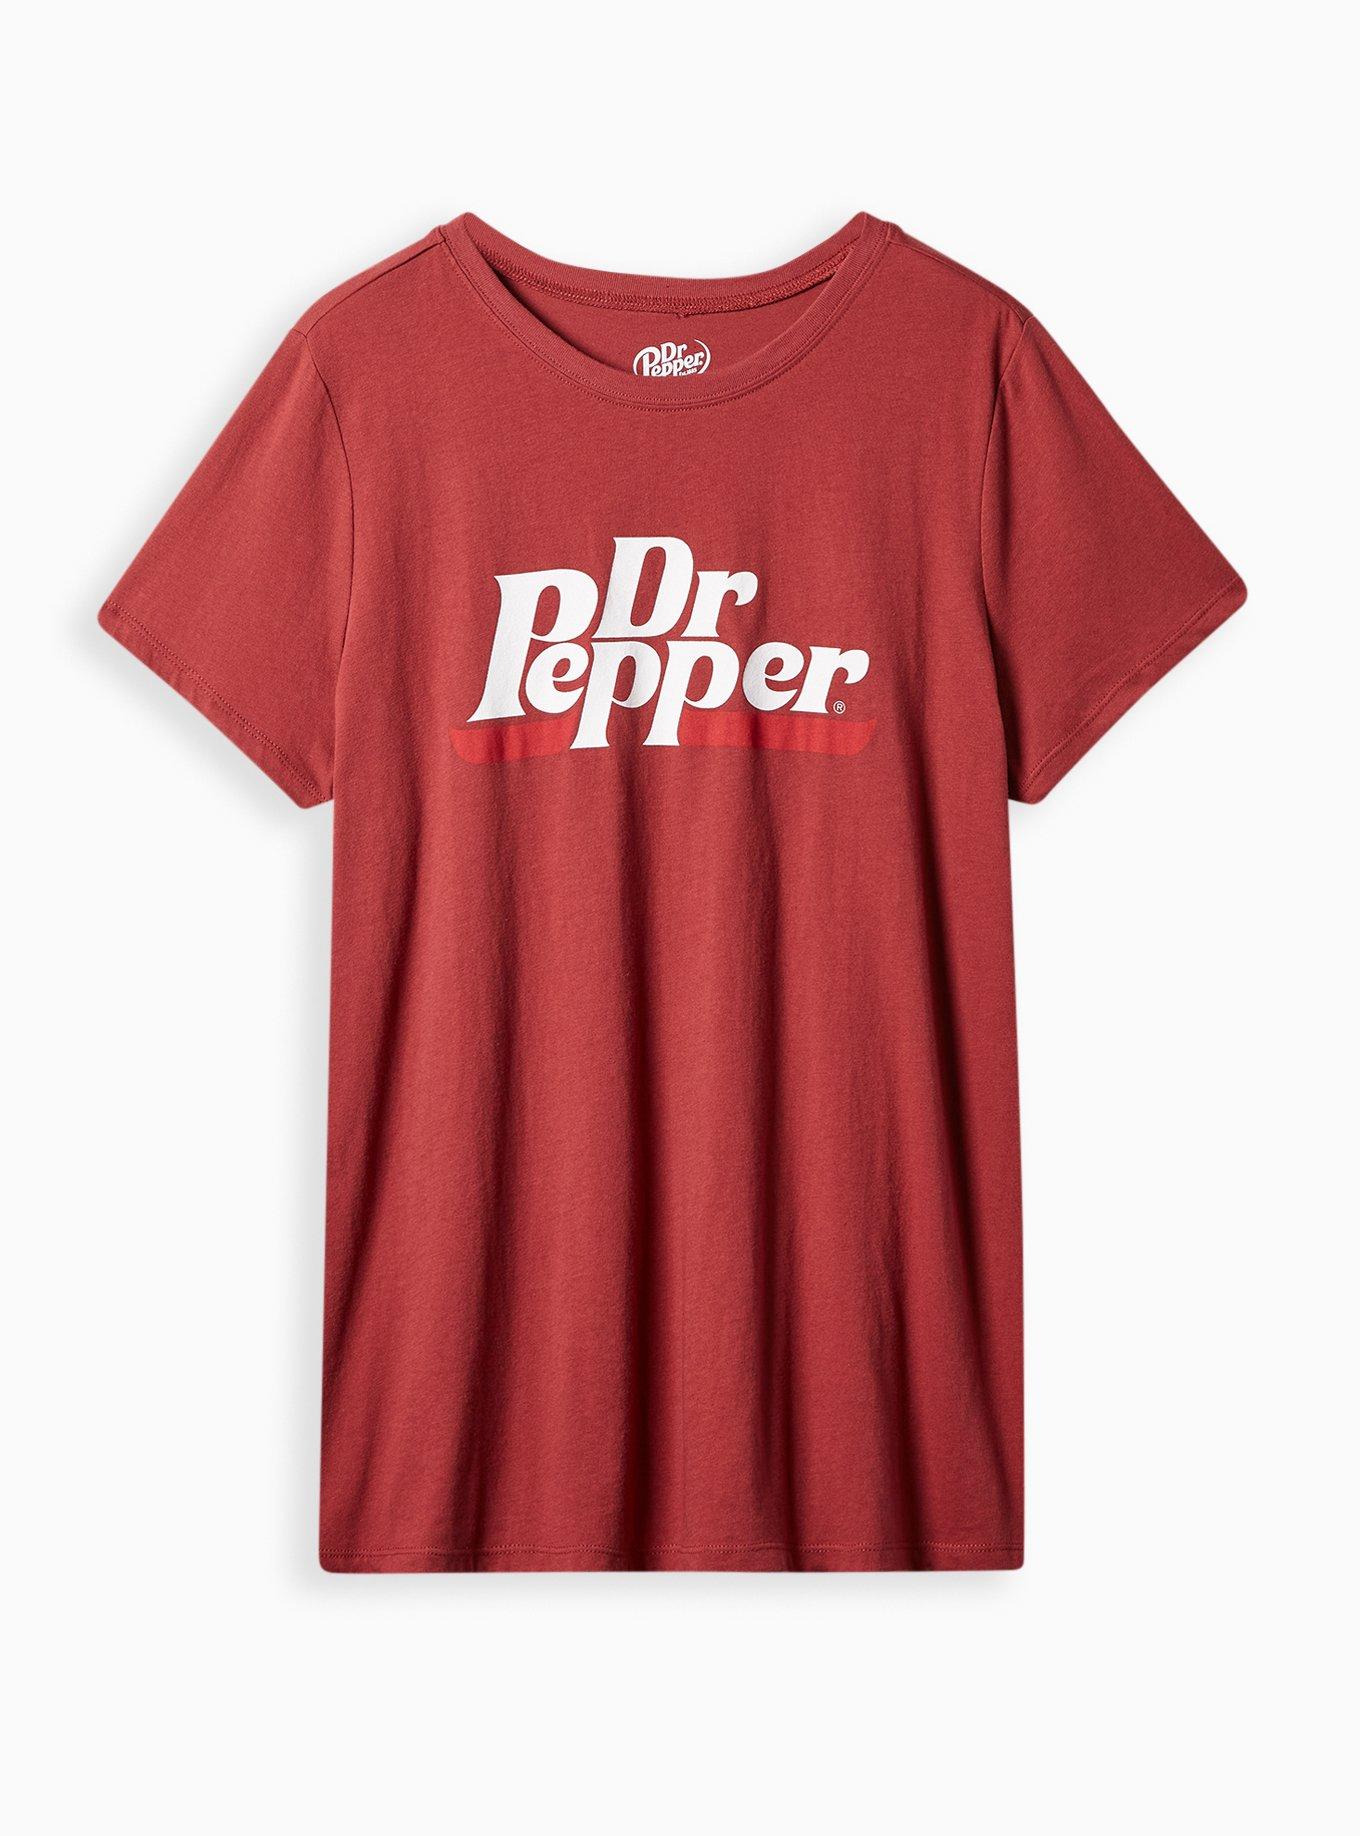 Plus Size - Dr Pepper Classic Fit Crew Top - Cotton Red - Torrid